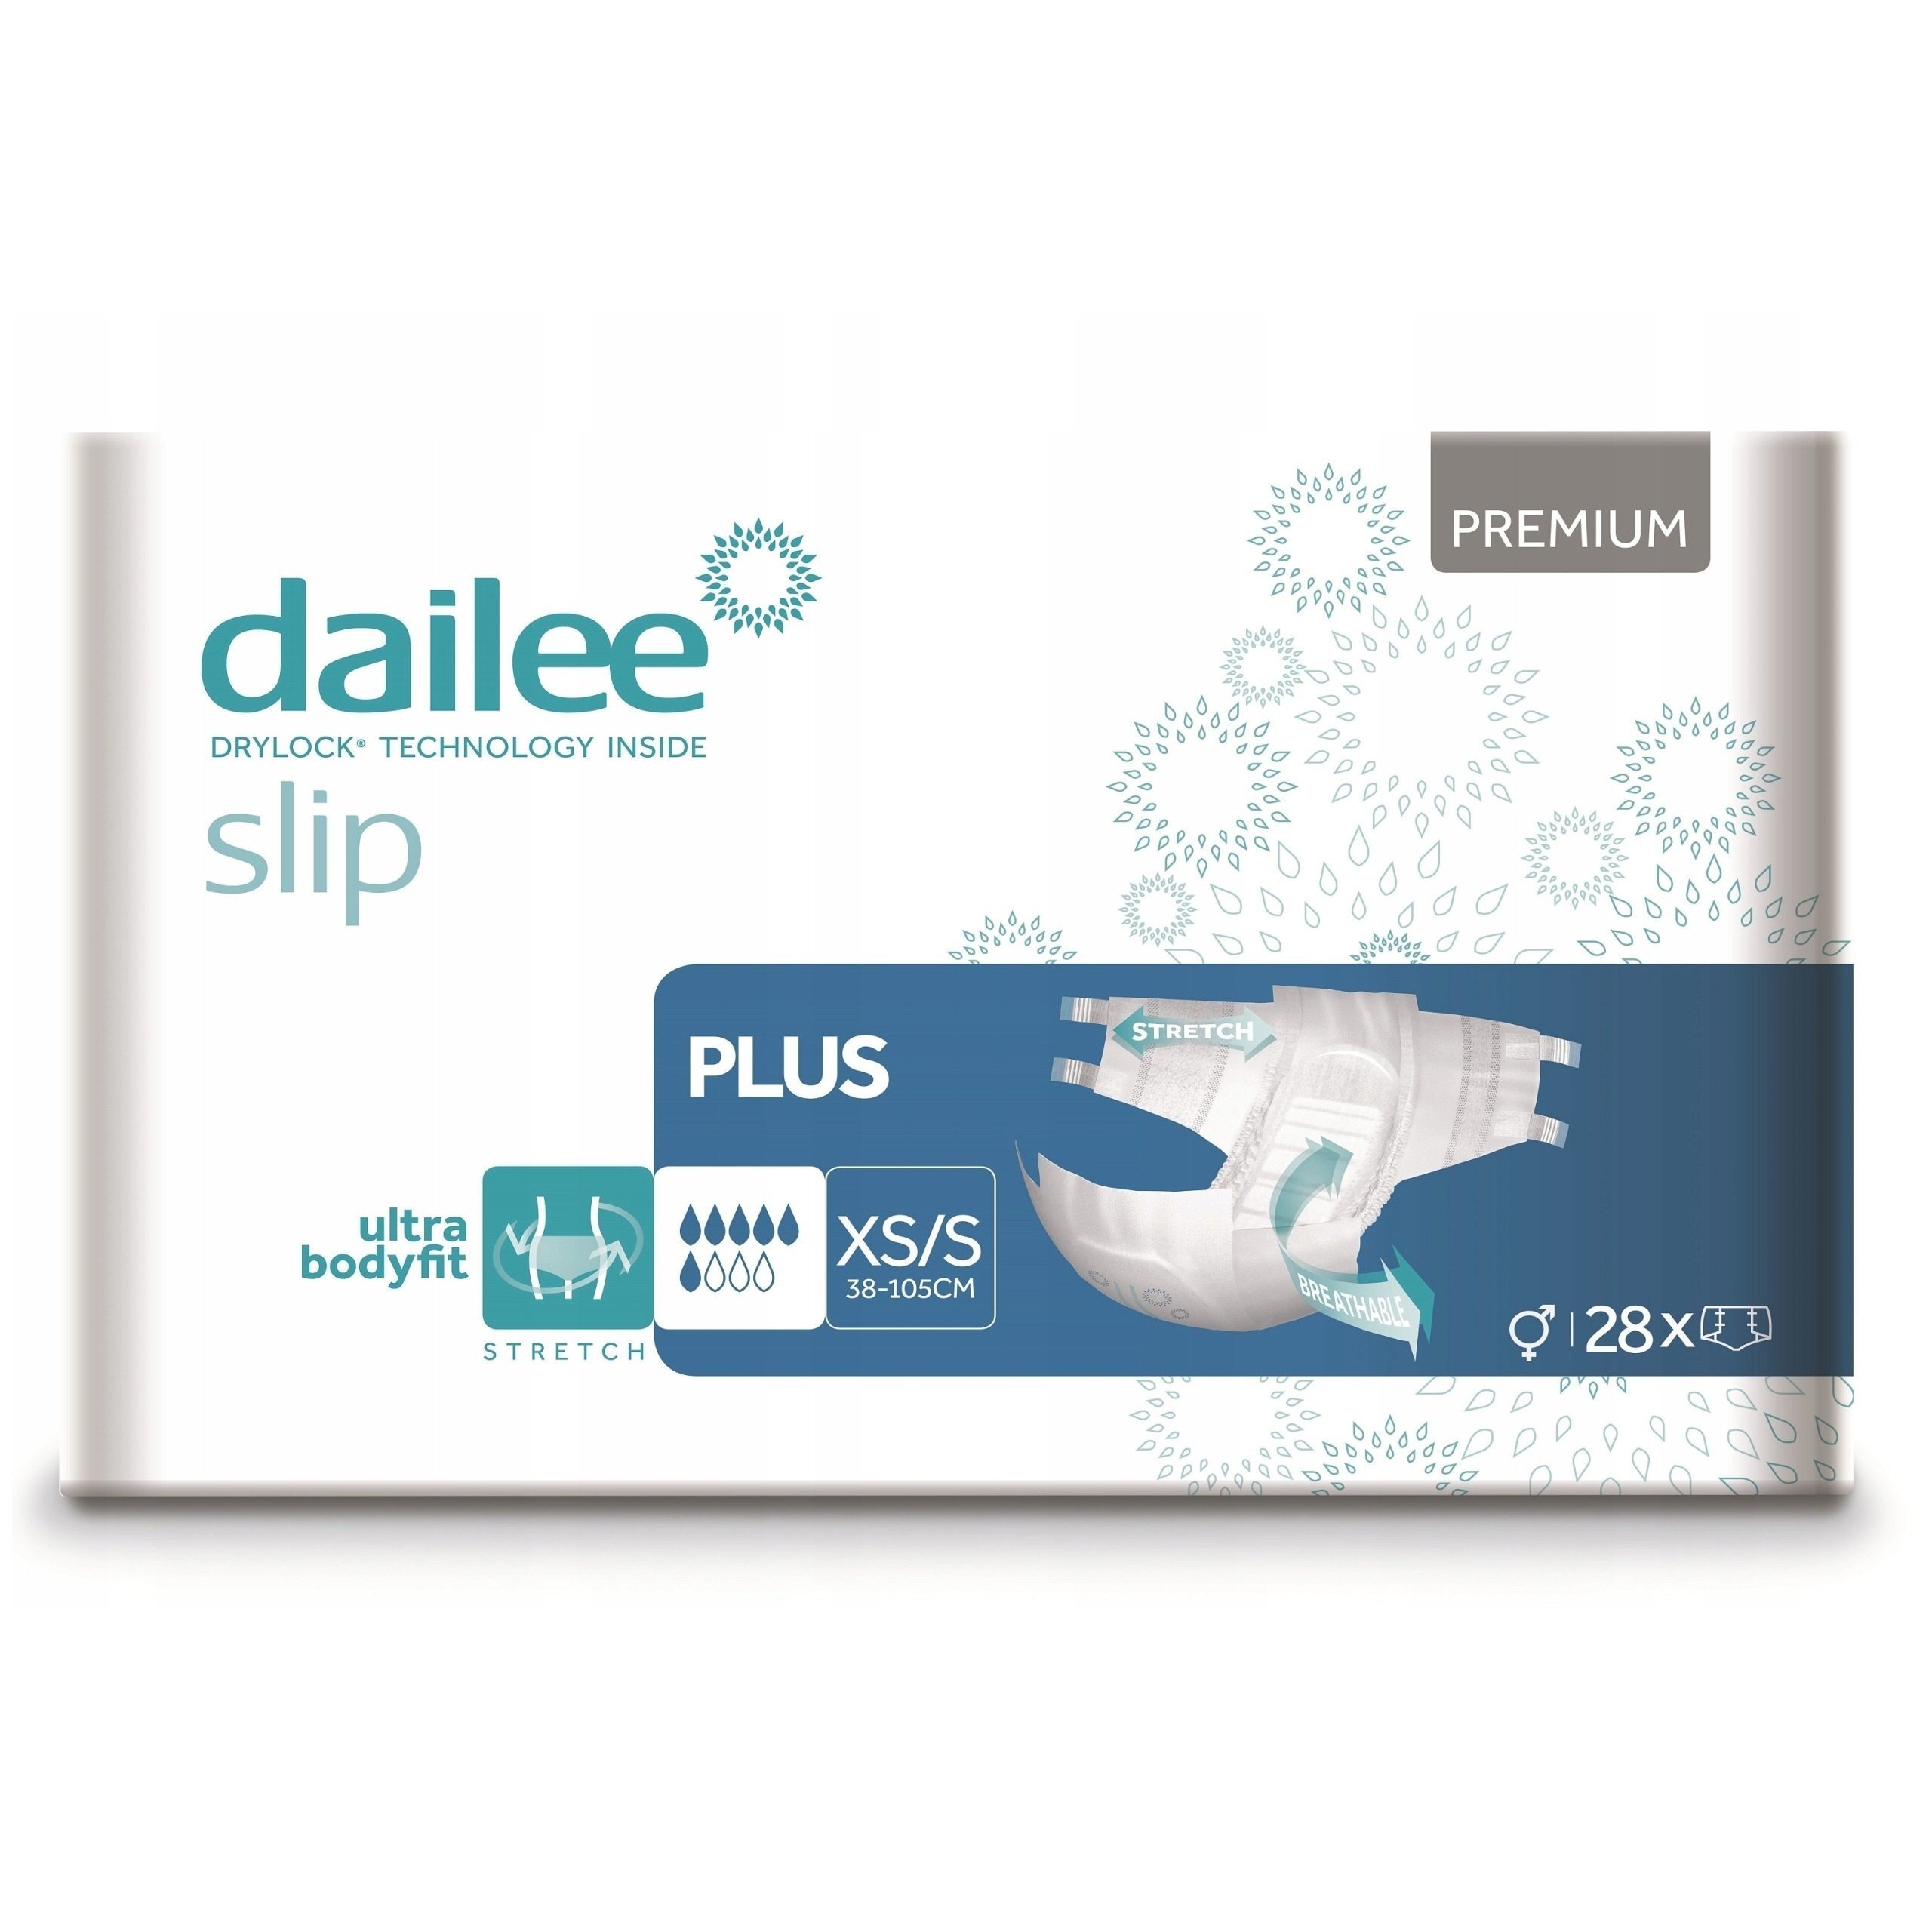 Подгузники для взрослых DAILEE Slip Premium XS/S ,28 шт. фото 1